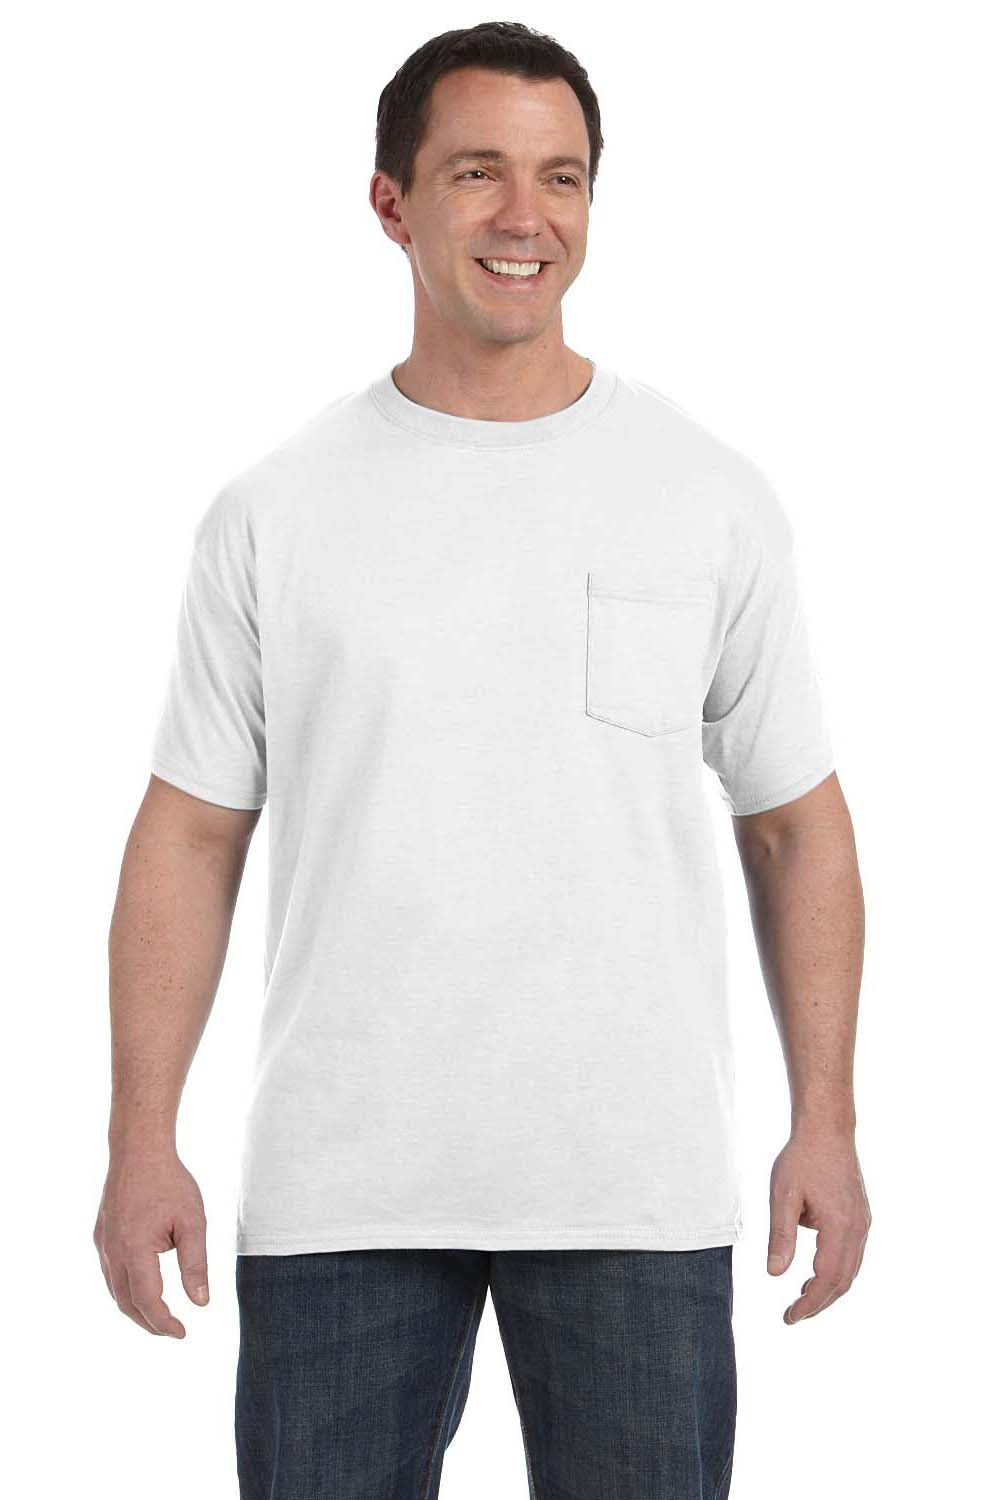 Hanes H5590 Mens ComfortSoft Short Sleeve Crewneck T-Shirt w/ Pocket White Front